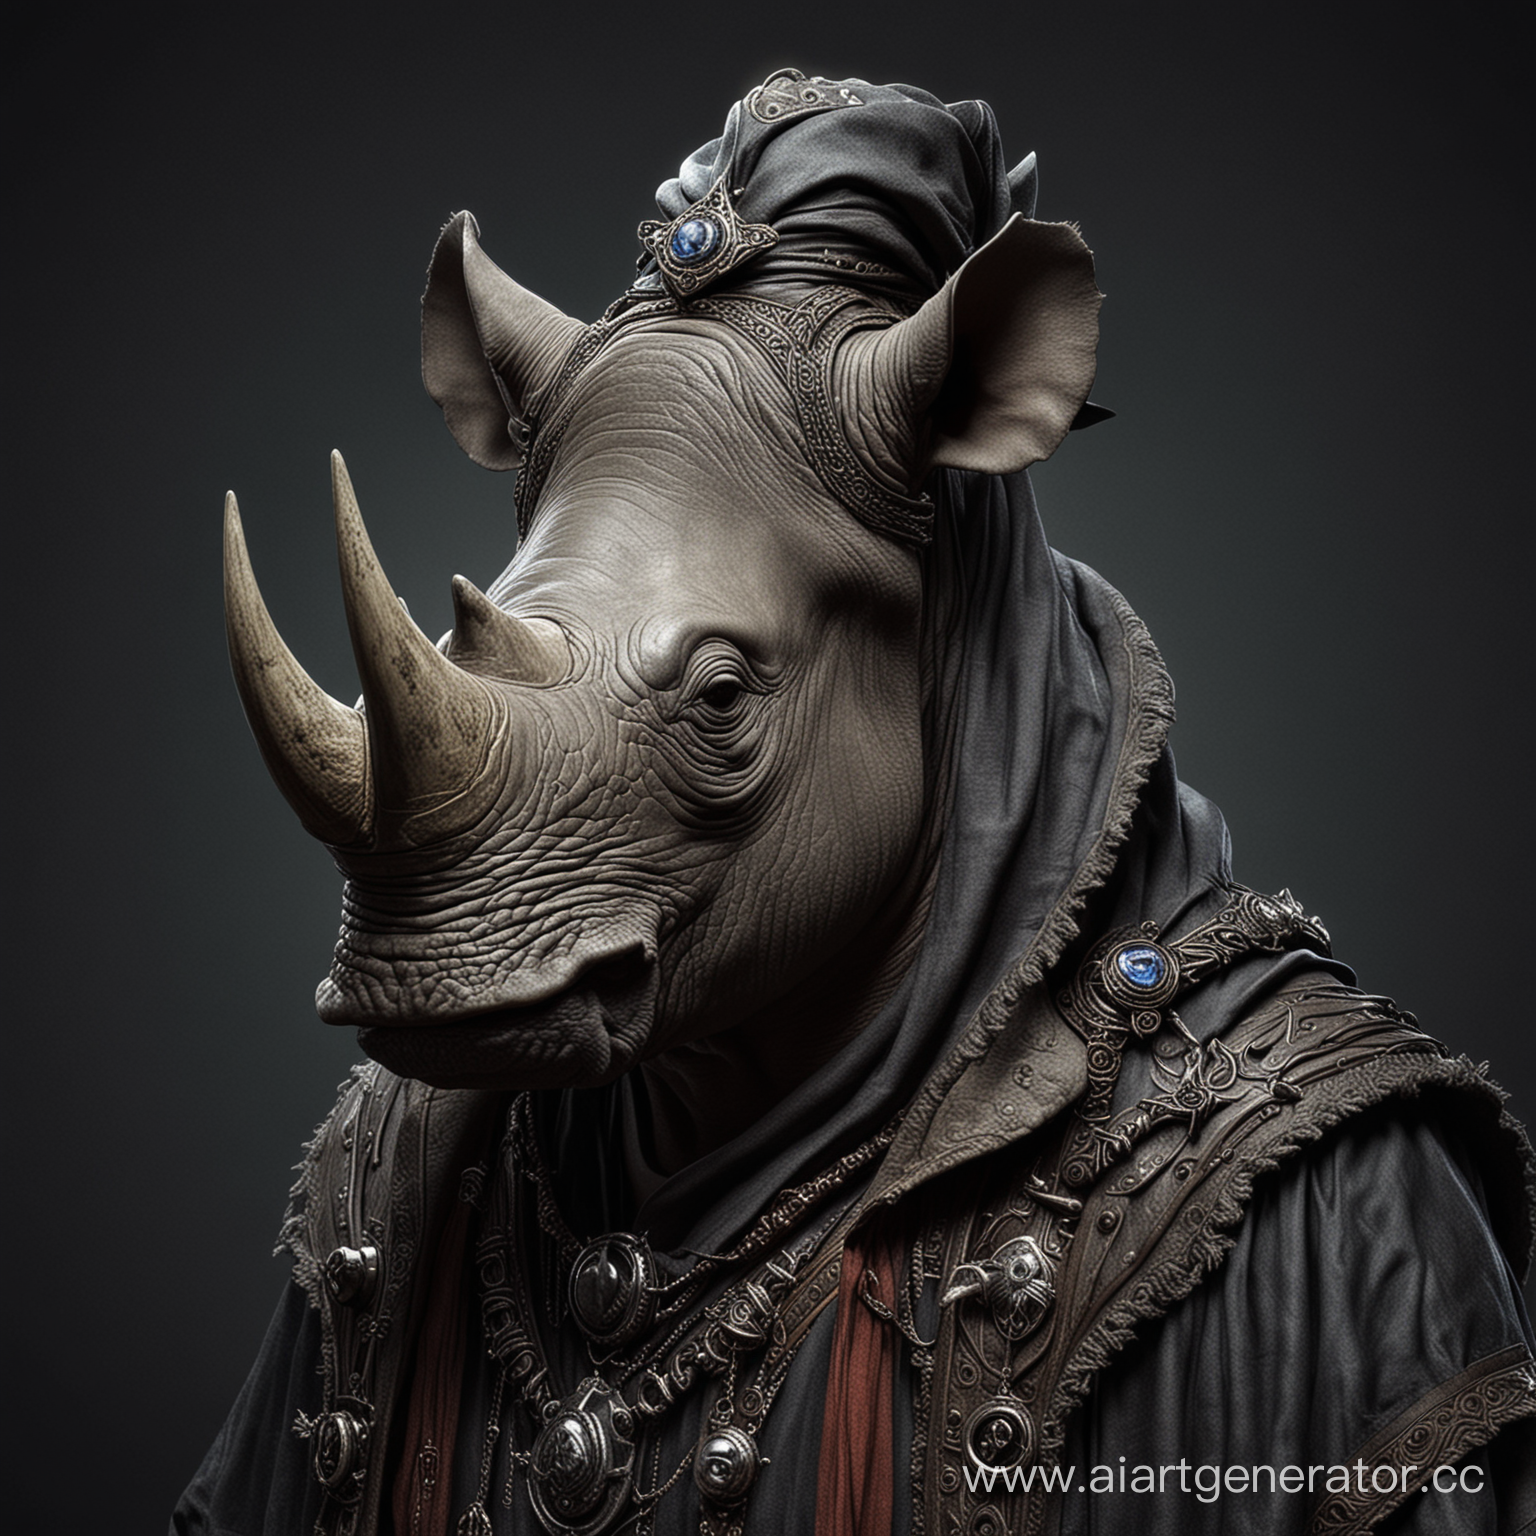 sorcerer, mage, rhino, with rhino head, gothic style